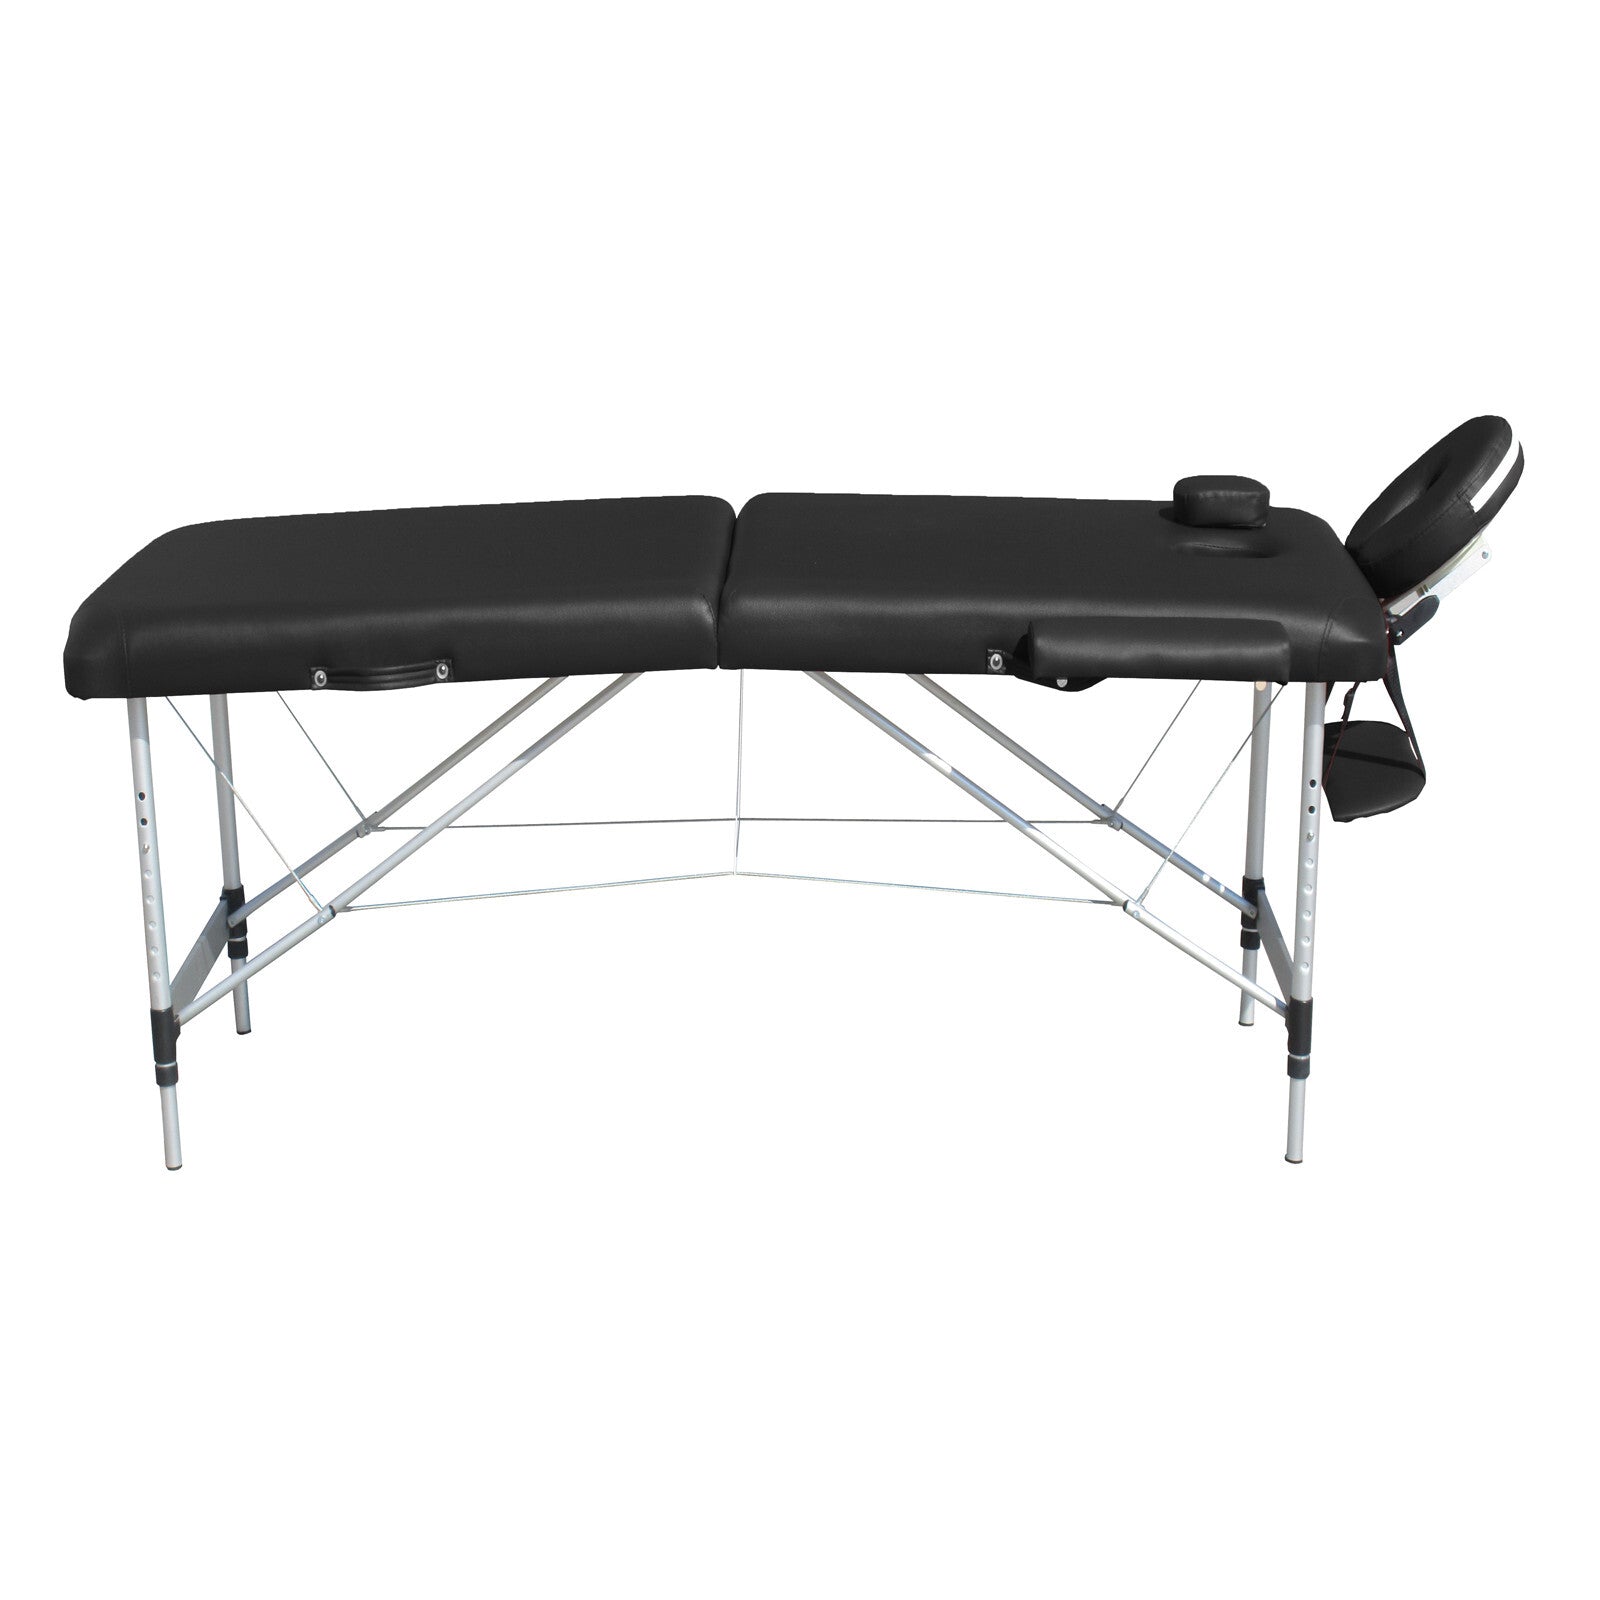 Portable 2-Fold Aluminium Massage Table for Beauty Therapy